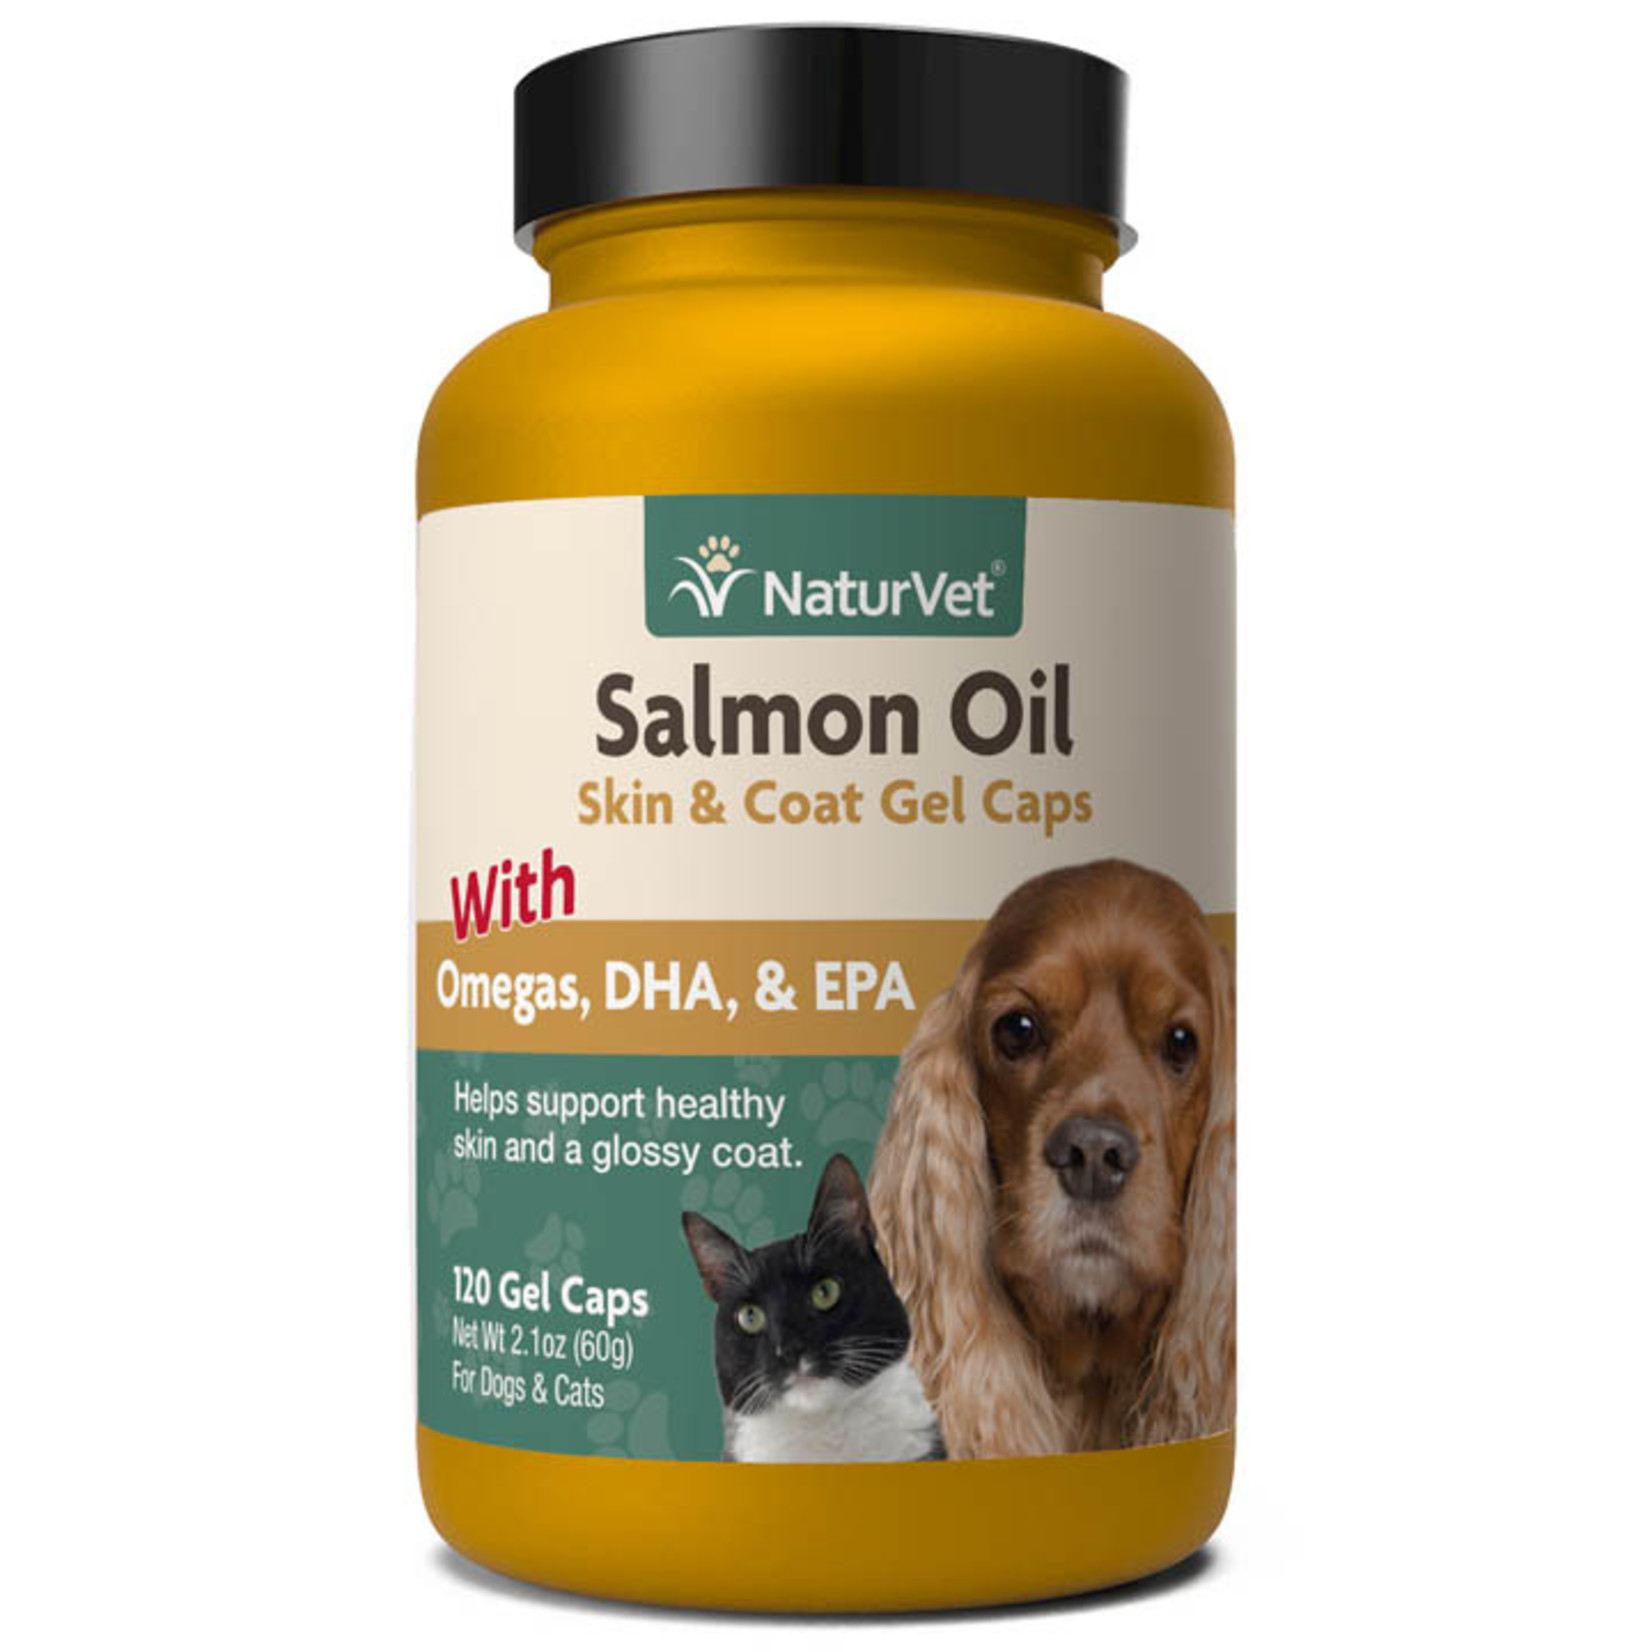 naturVet NaturVet Salmon Oil Skin and Coat Gel Caps with Omegas, DHA, & EPA 120ct